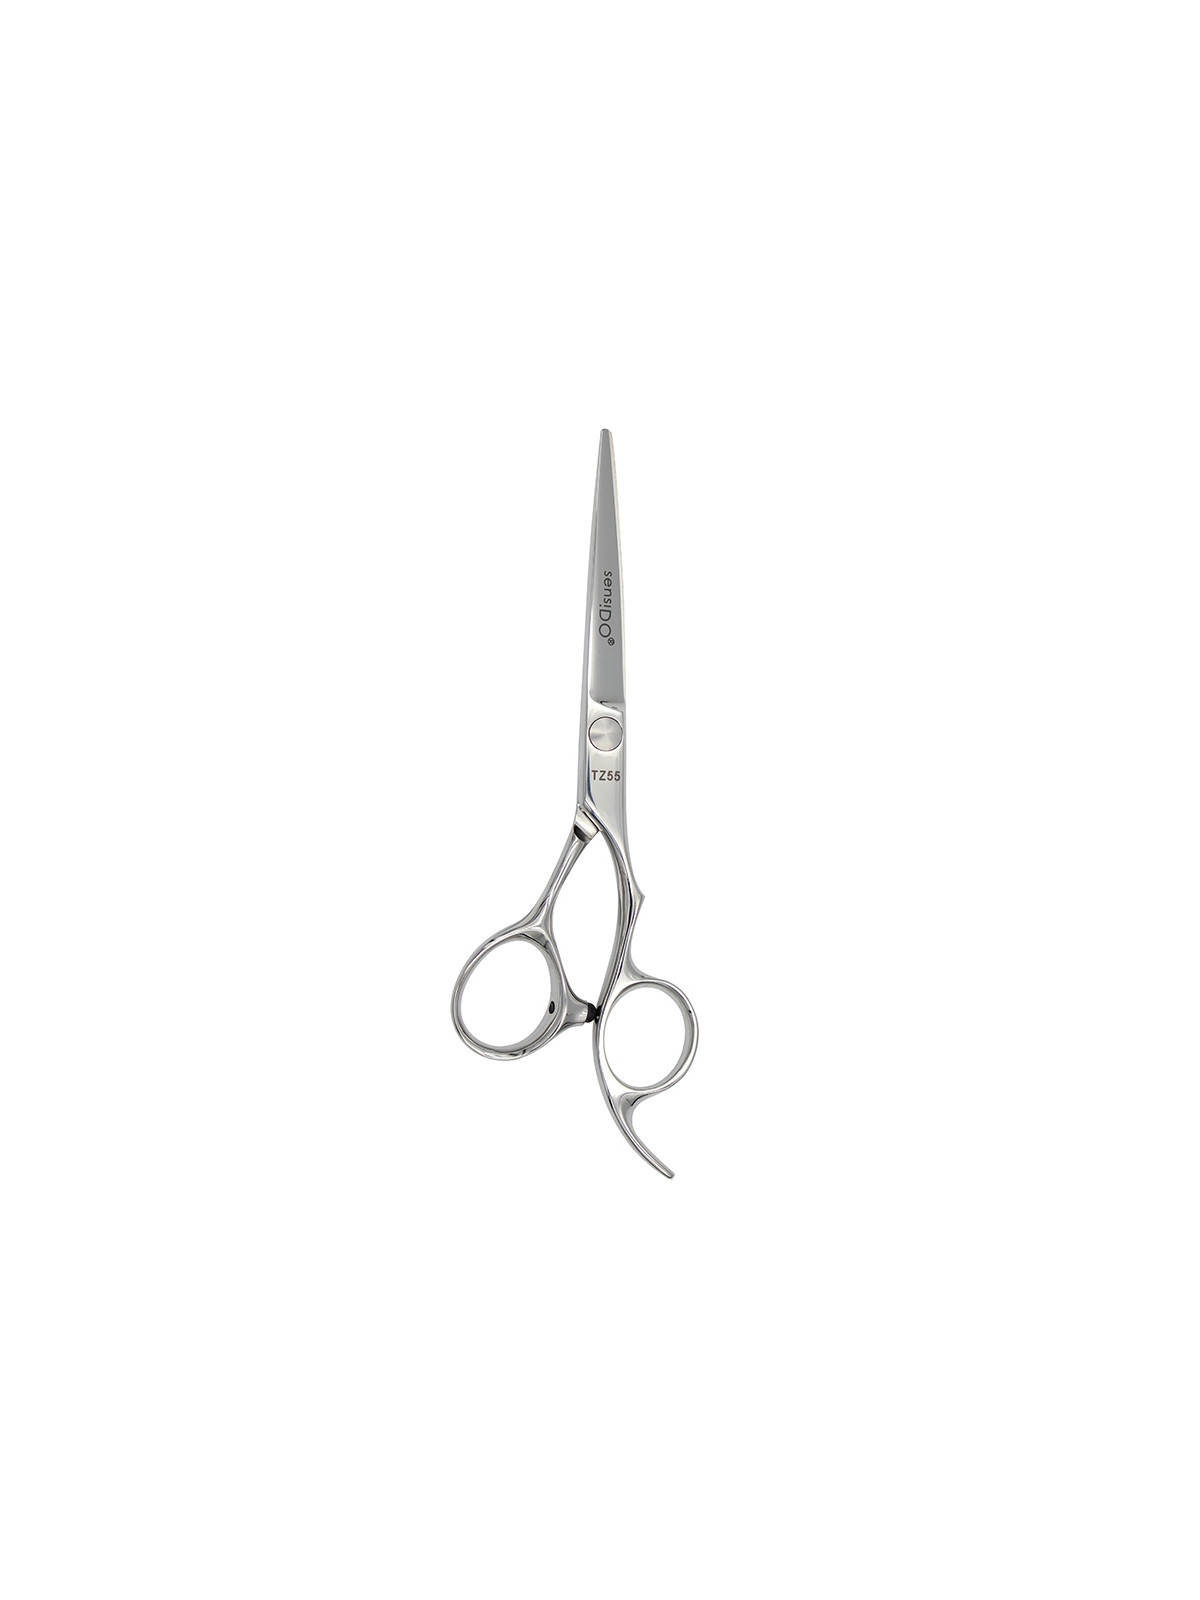 SensiDO TZ cutting scissors